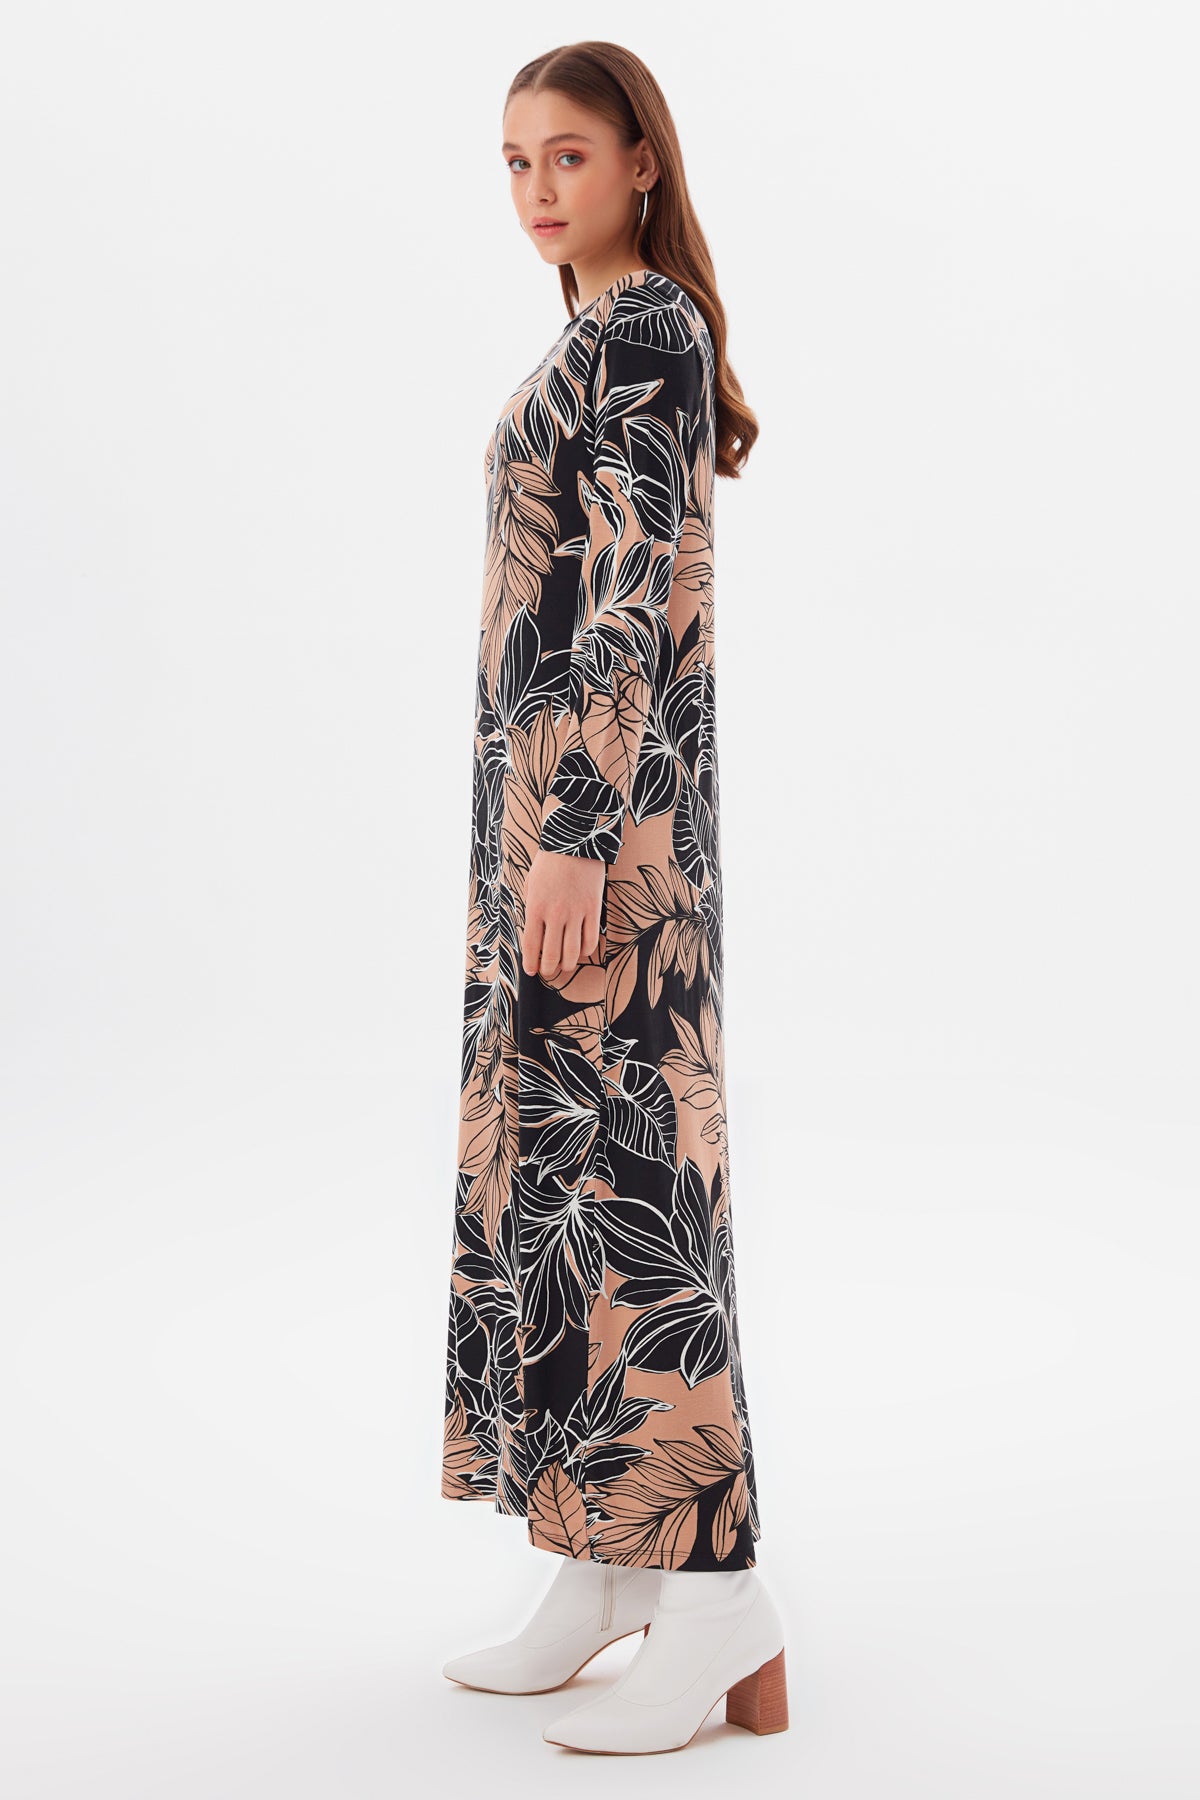 MUNI MUNI - Printed Long Viscose Dress - light brown